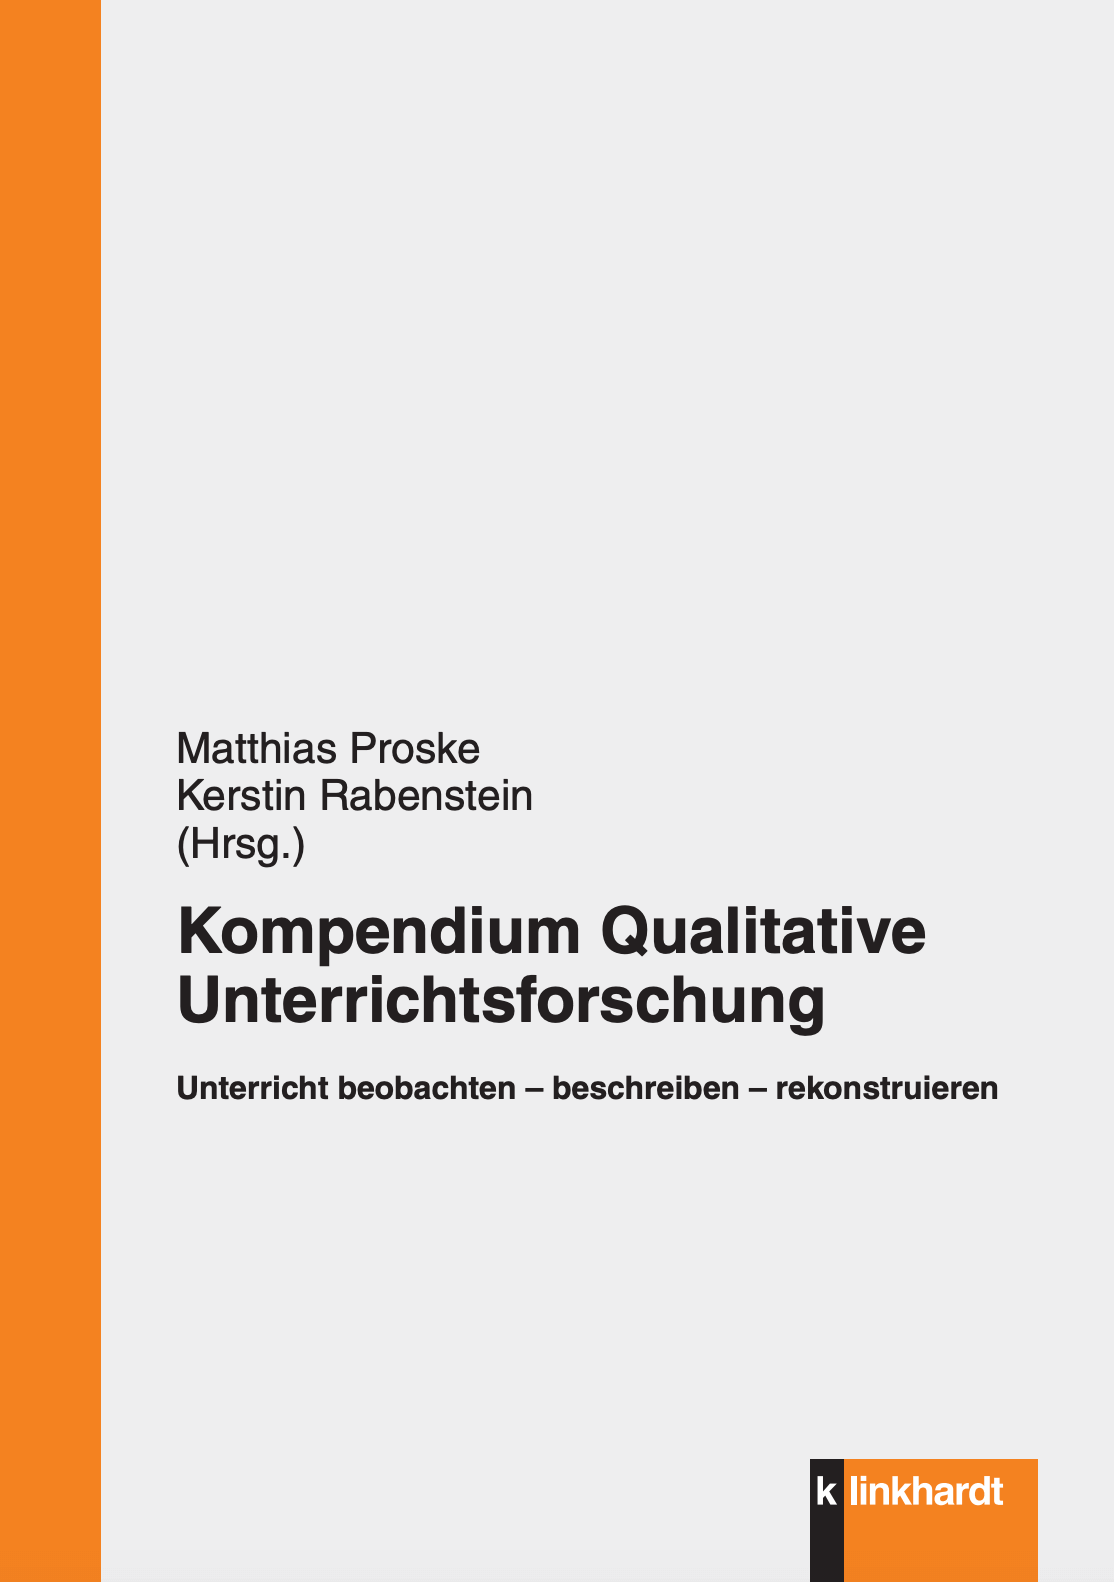 Kompendium Qualitative Unterrichtsforschung